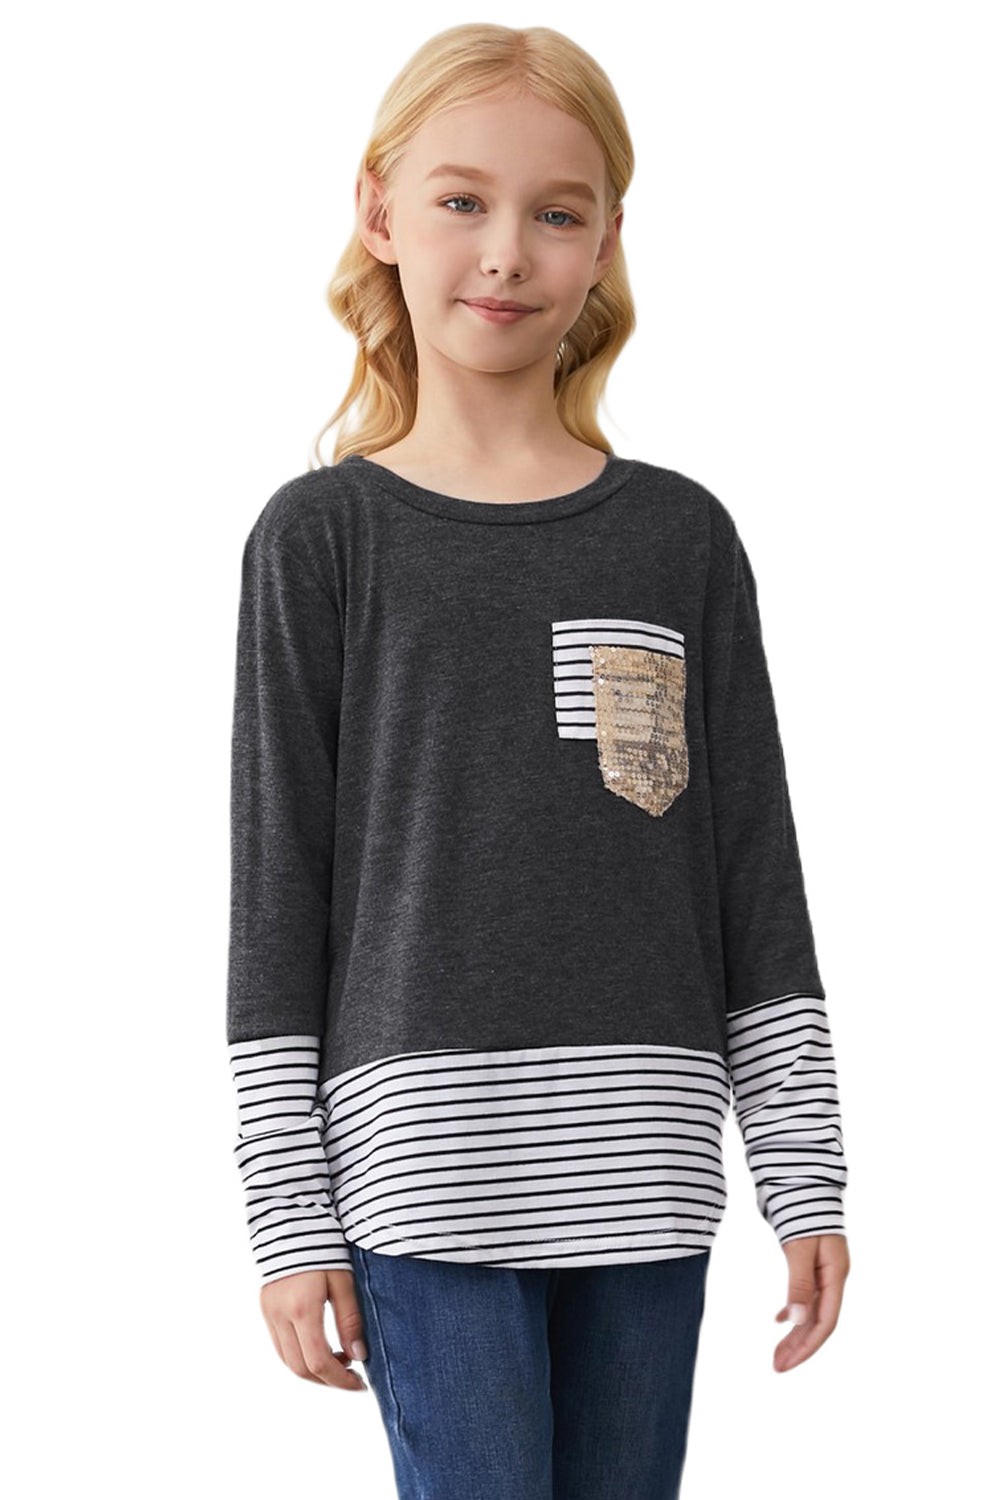 Girls Striped Color Block Sequin Pocket Top - DromedarShop.com Online Boutique